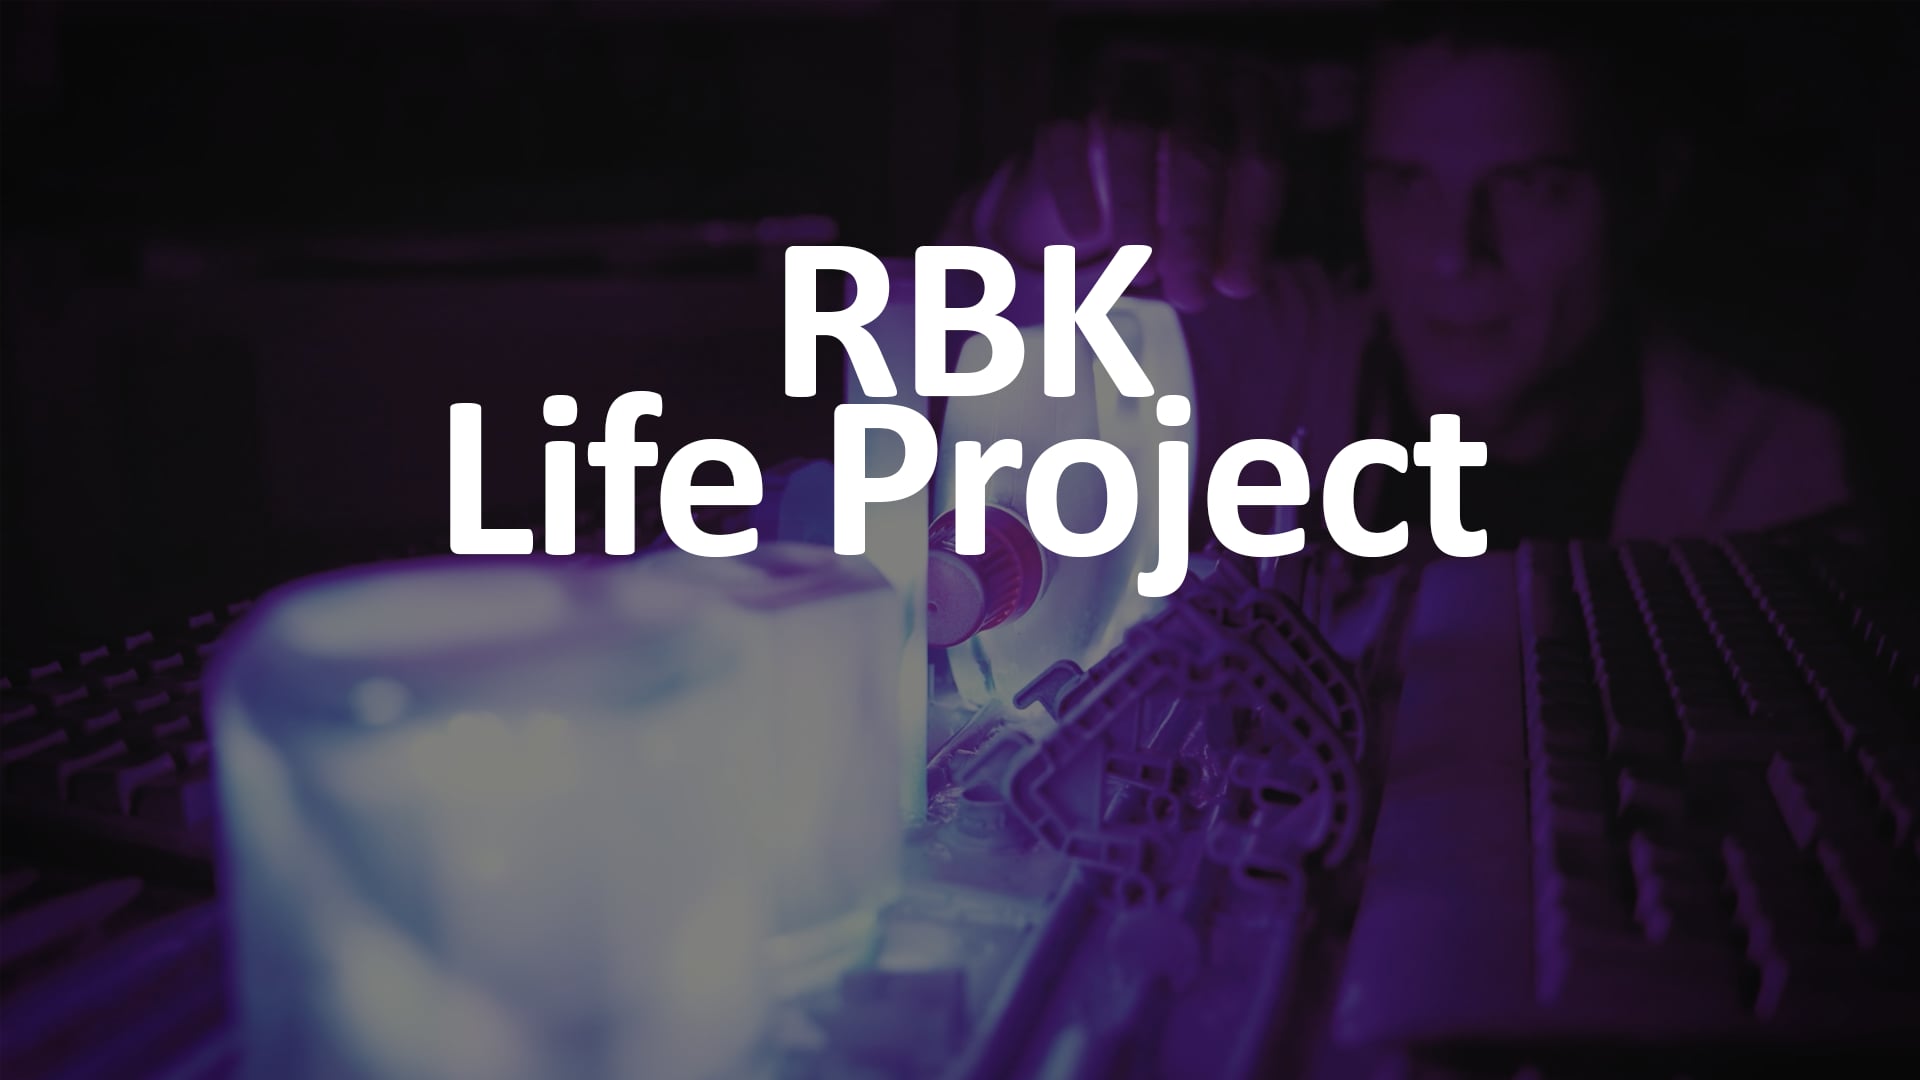 RBK Life Project art installations